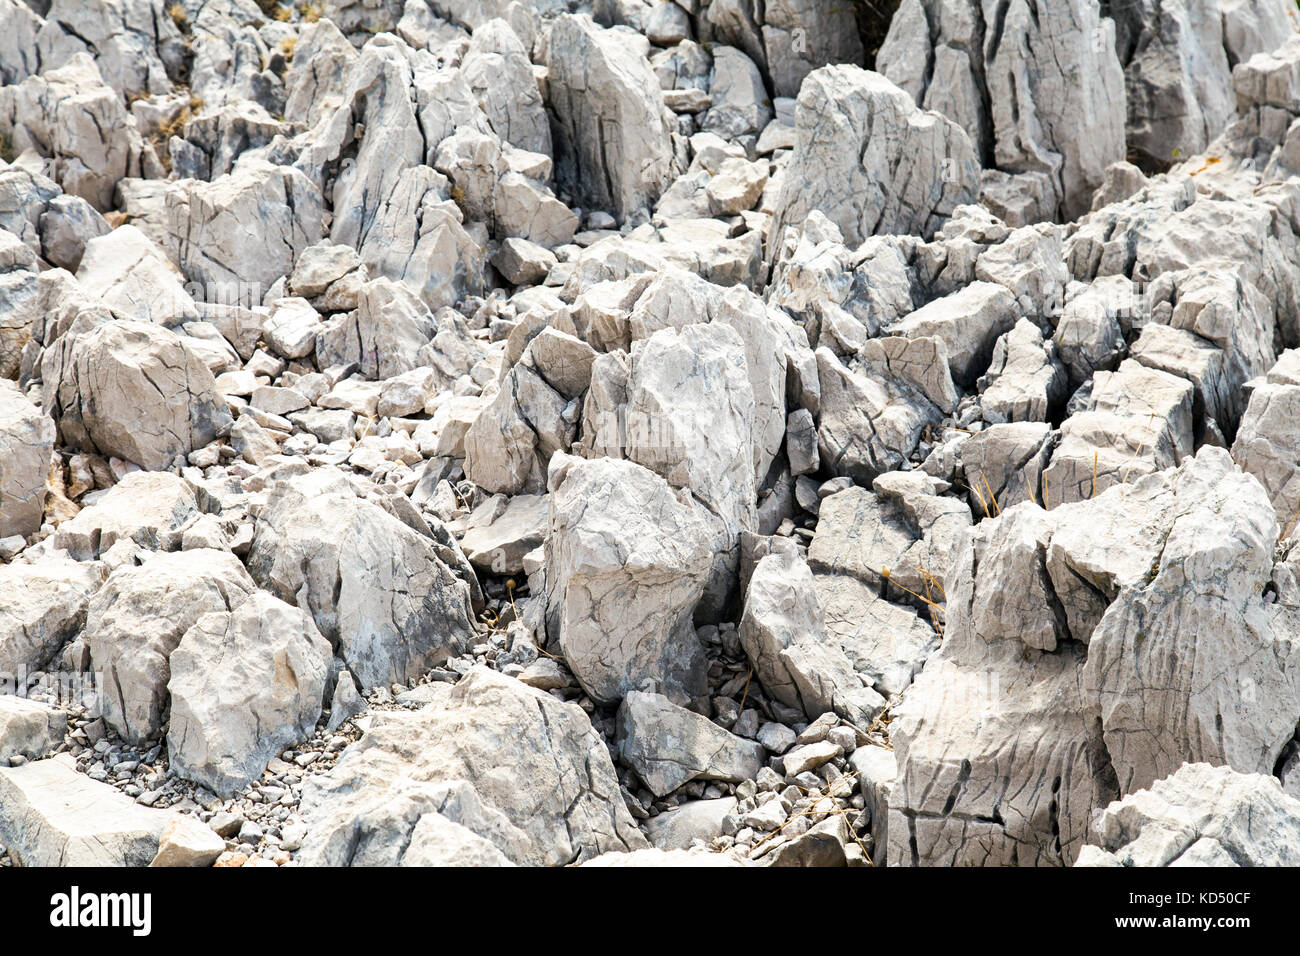 Sharp limestone rocks, rocky terrain at Calanque de Sugiton, Calanques National Park, France Stock Photo